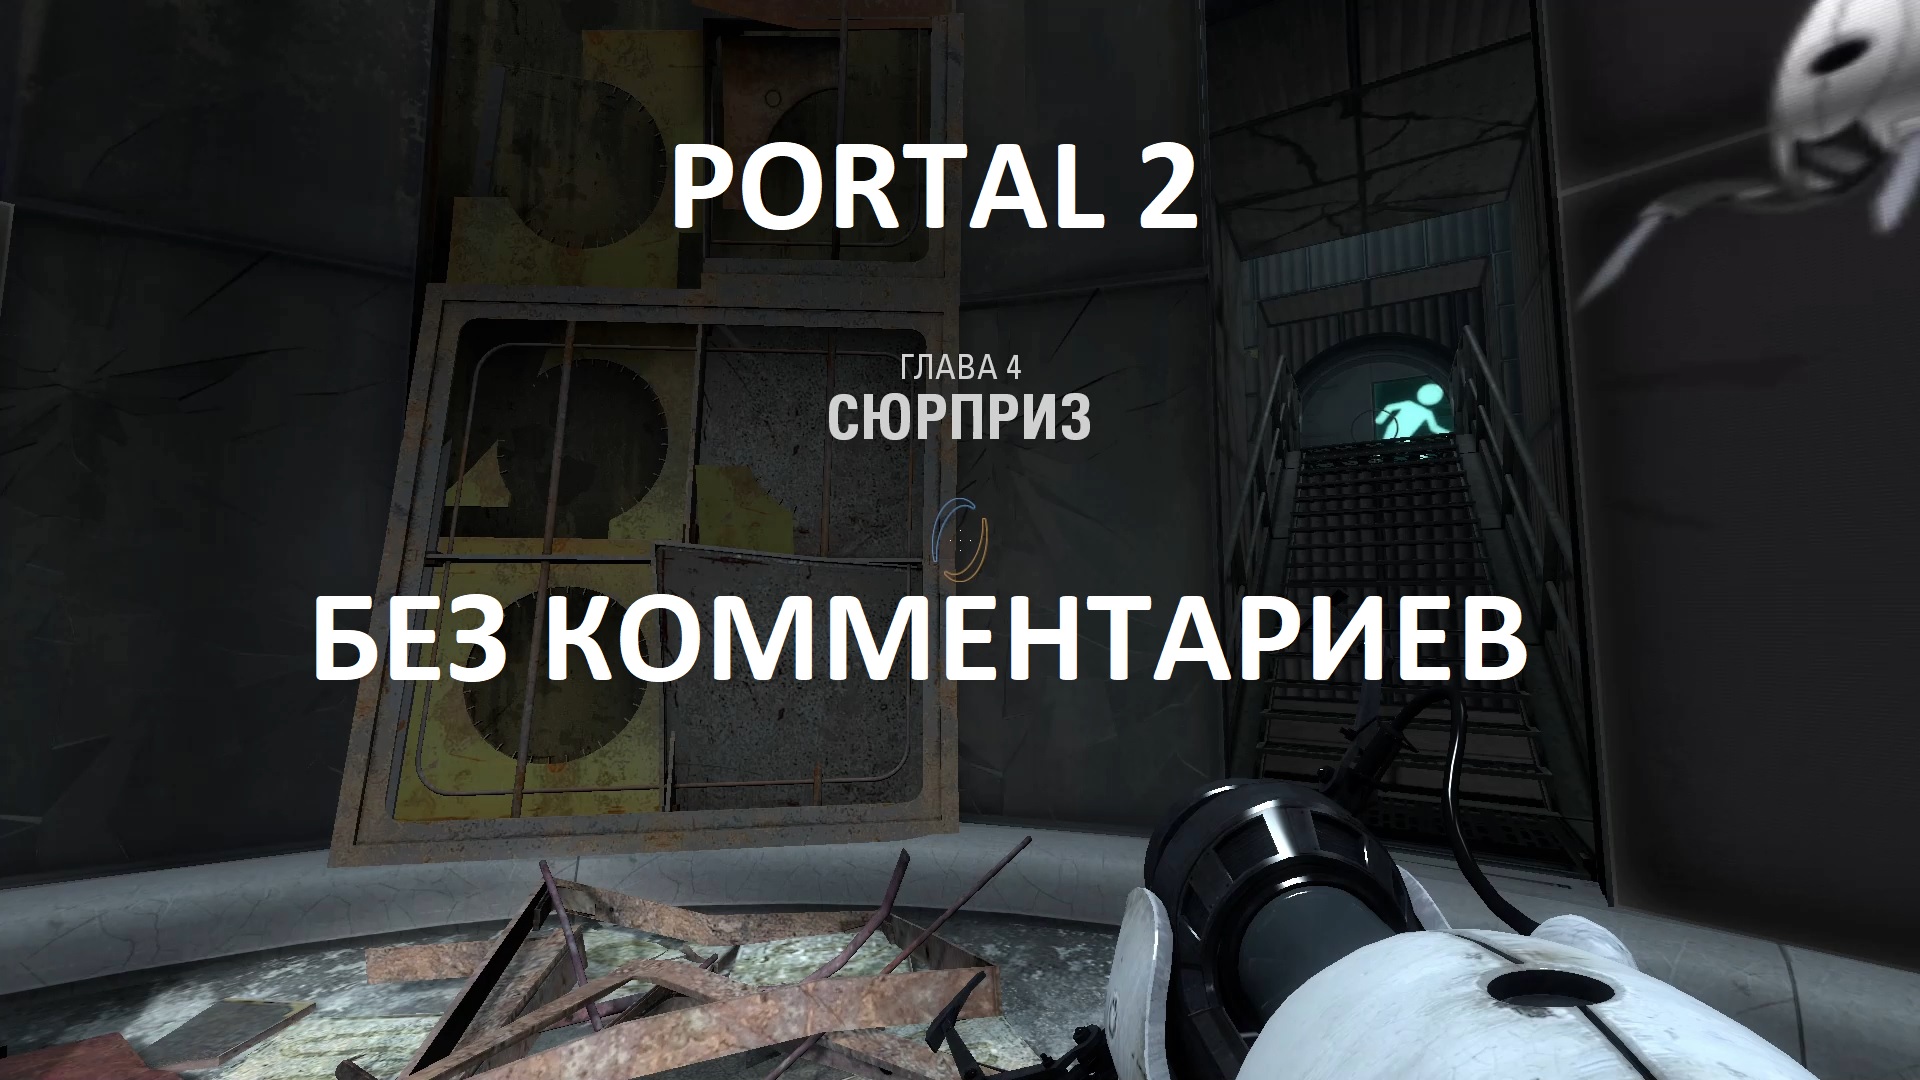 Portal 2 как пройти 6 уровень кооператив фото 25